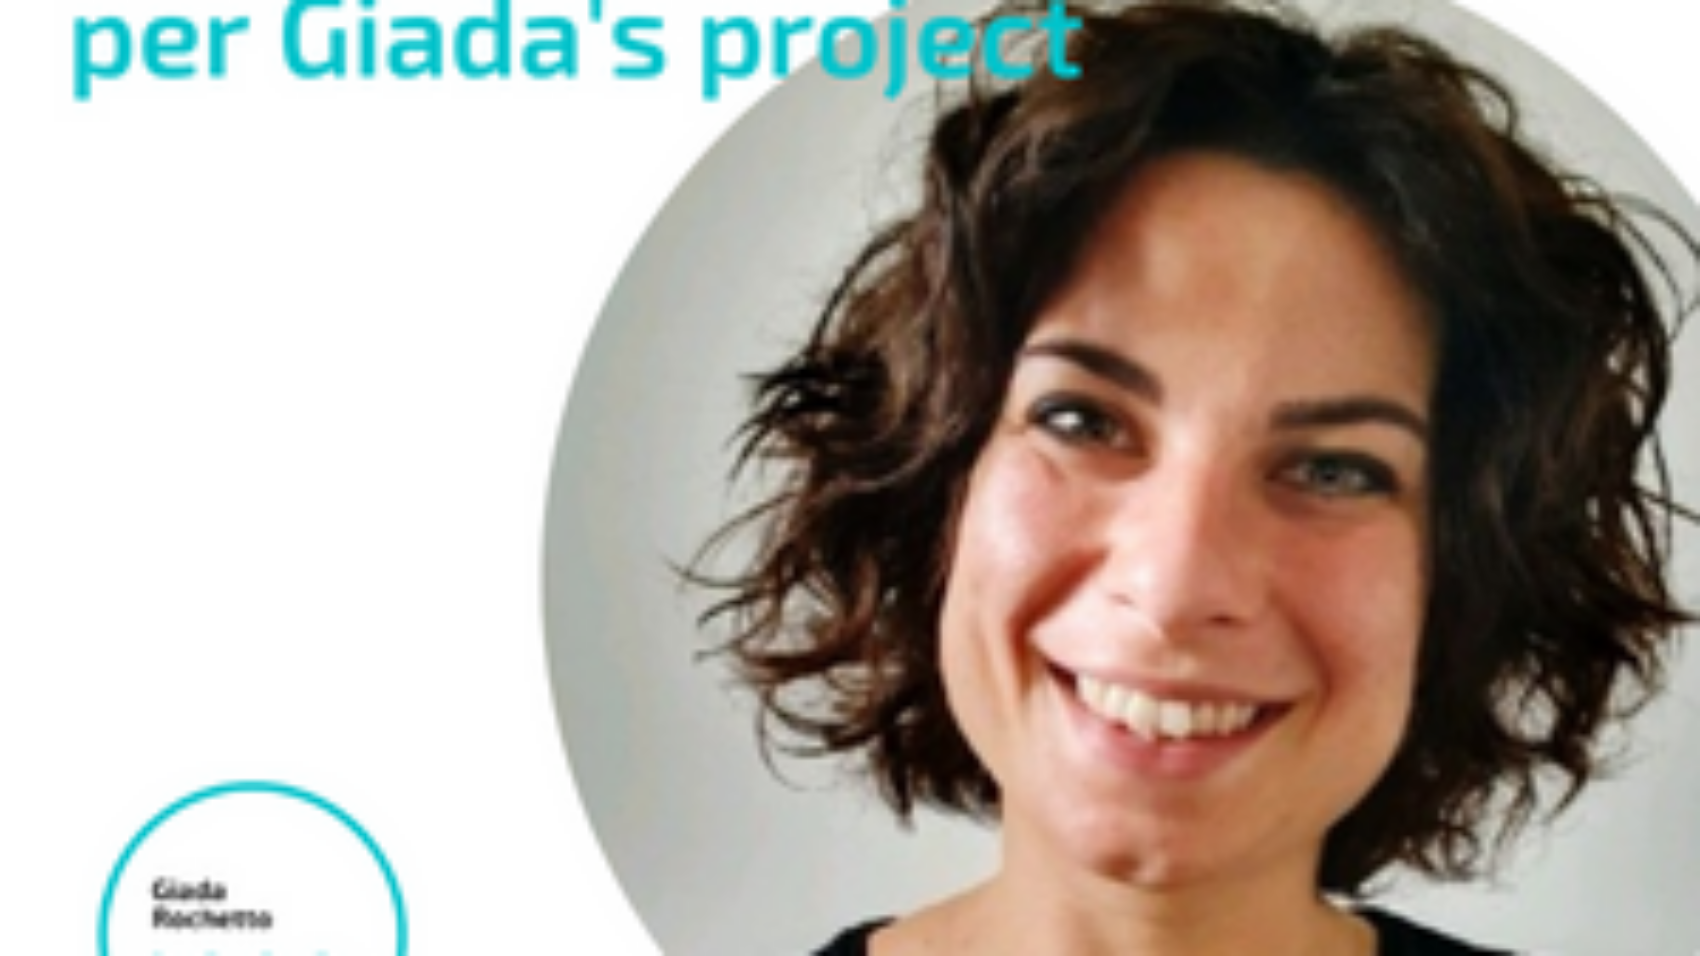 Ilaria Taviani per Giada's project